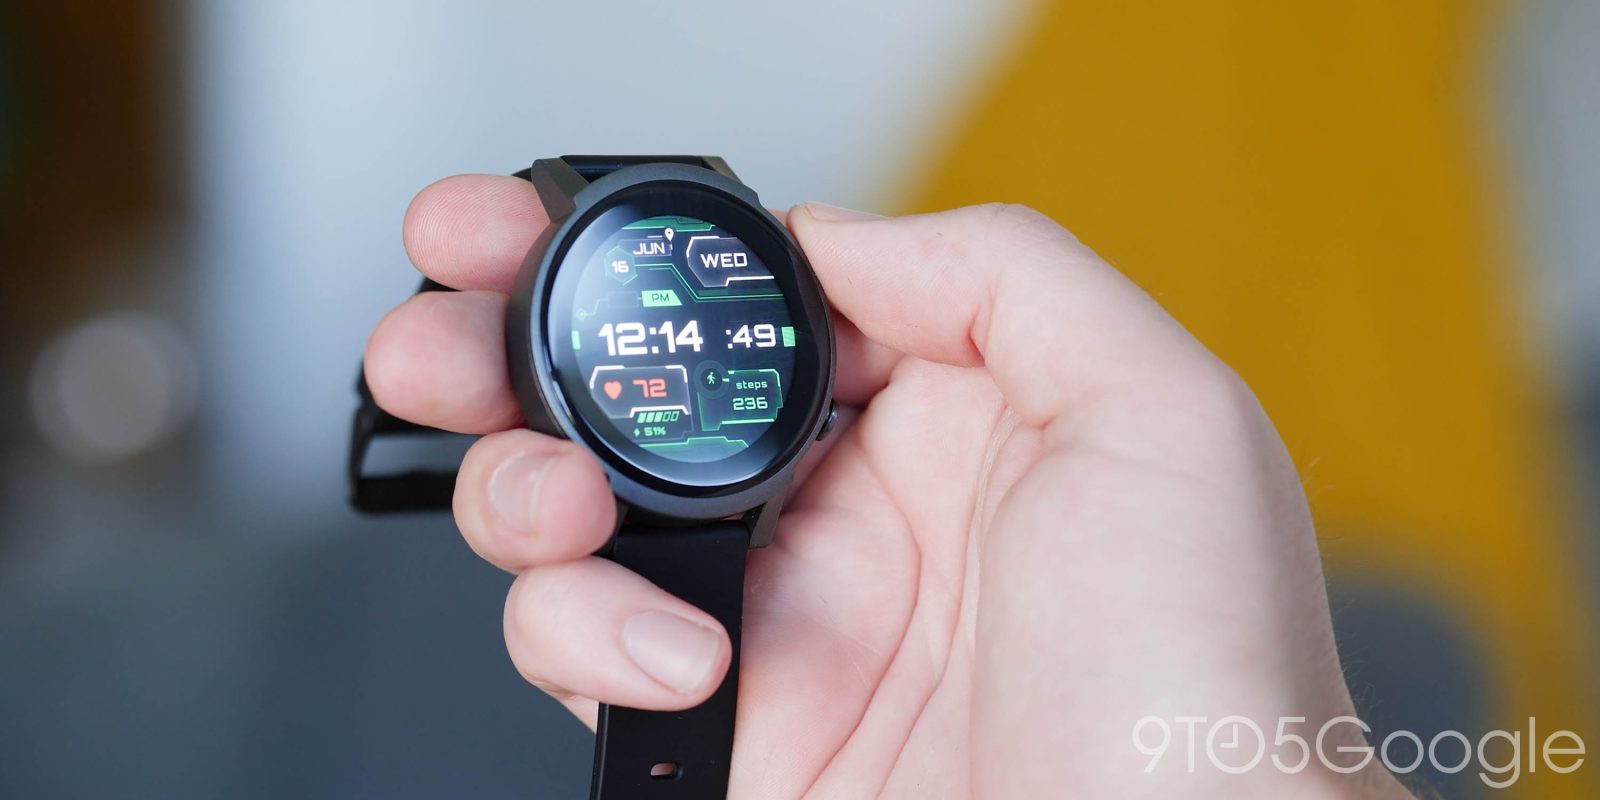 Mobvoi E3 review: smartwatch savings time 9to5Google